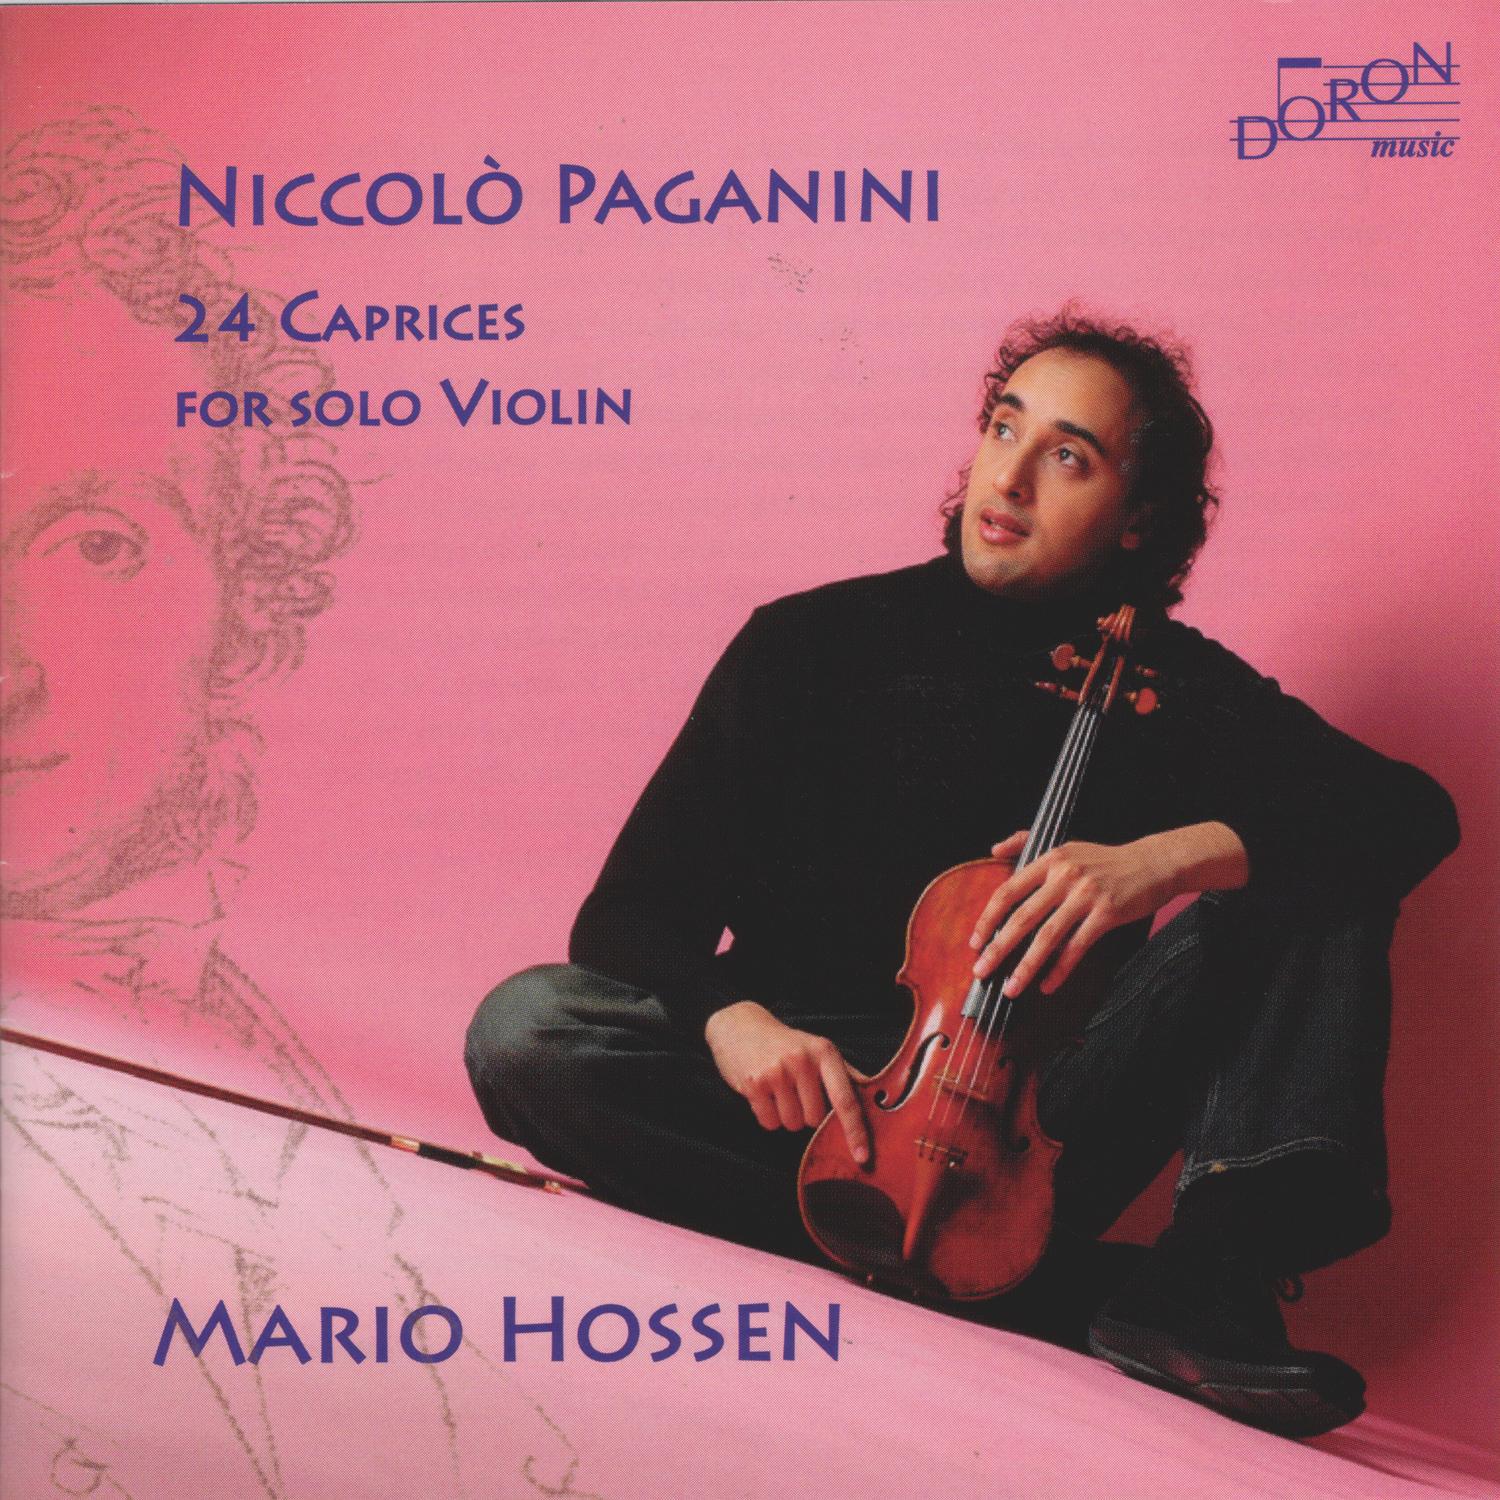 24 Caprices for Solo Violin, Op. 1: VII. Posato